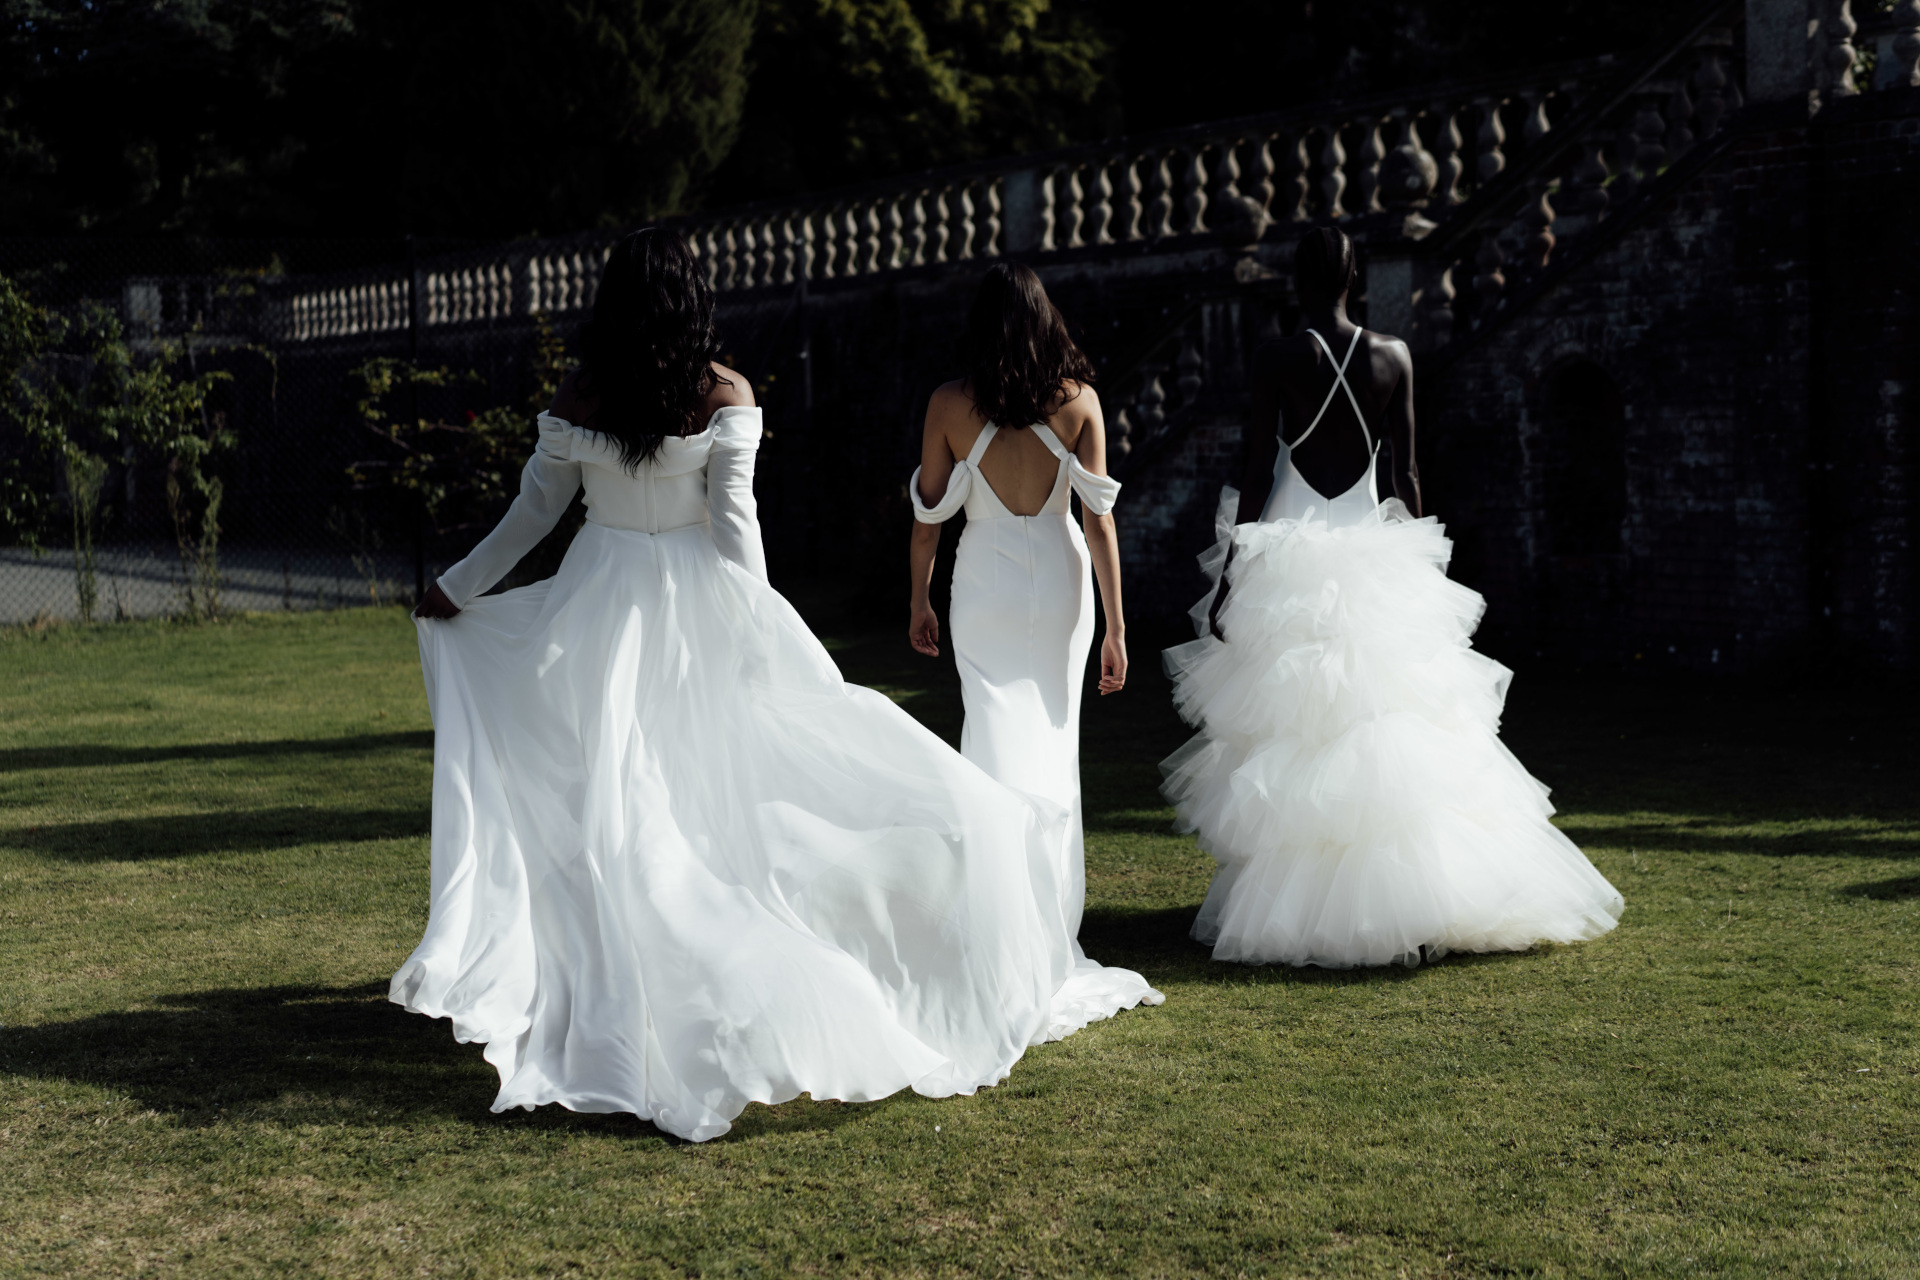 Three women in wedding dresses walking away on grass